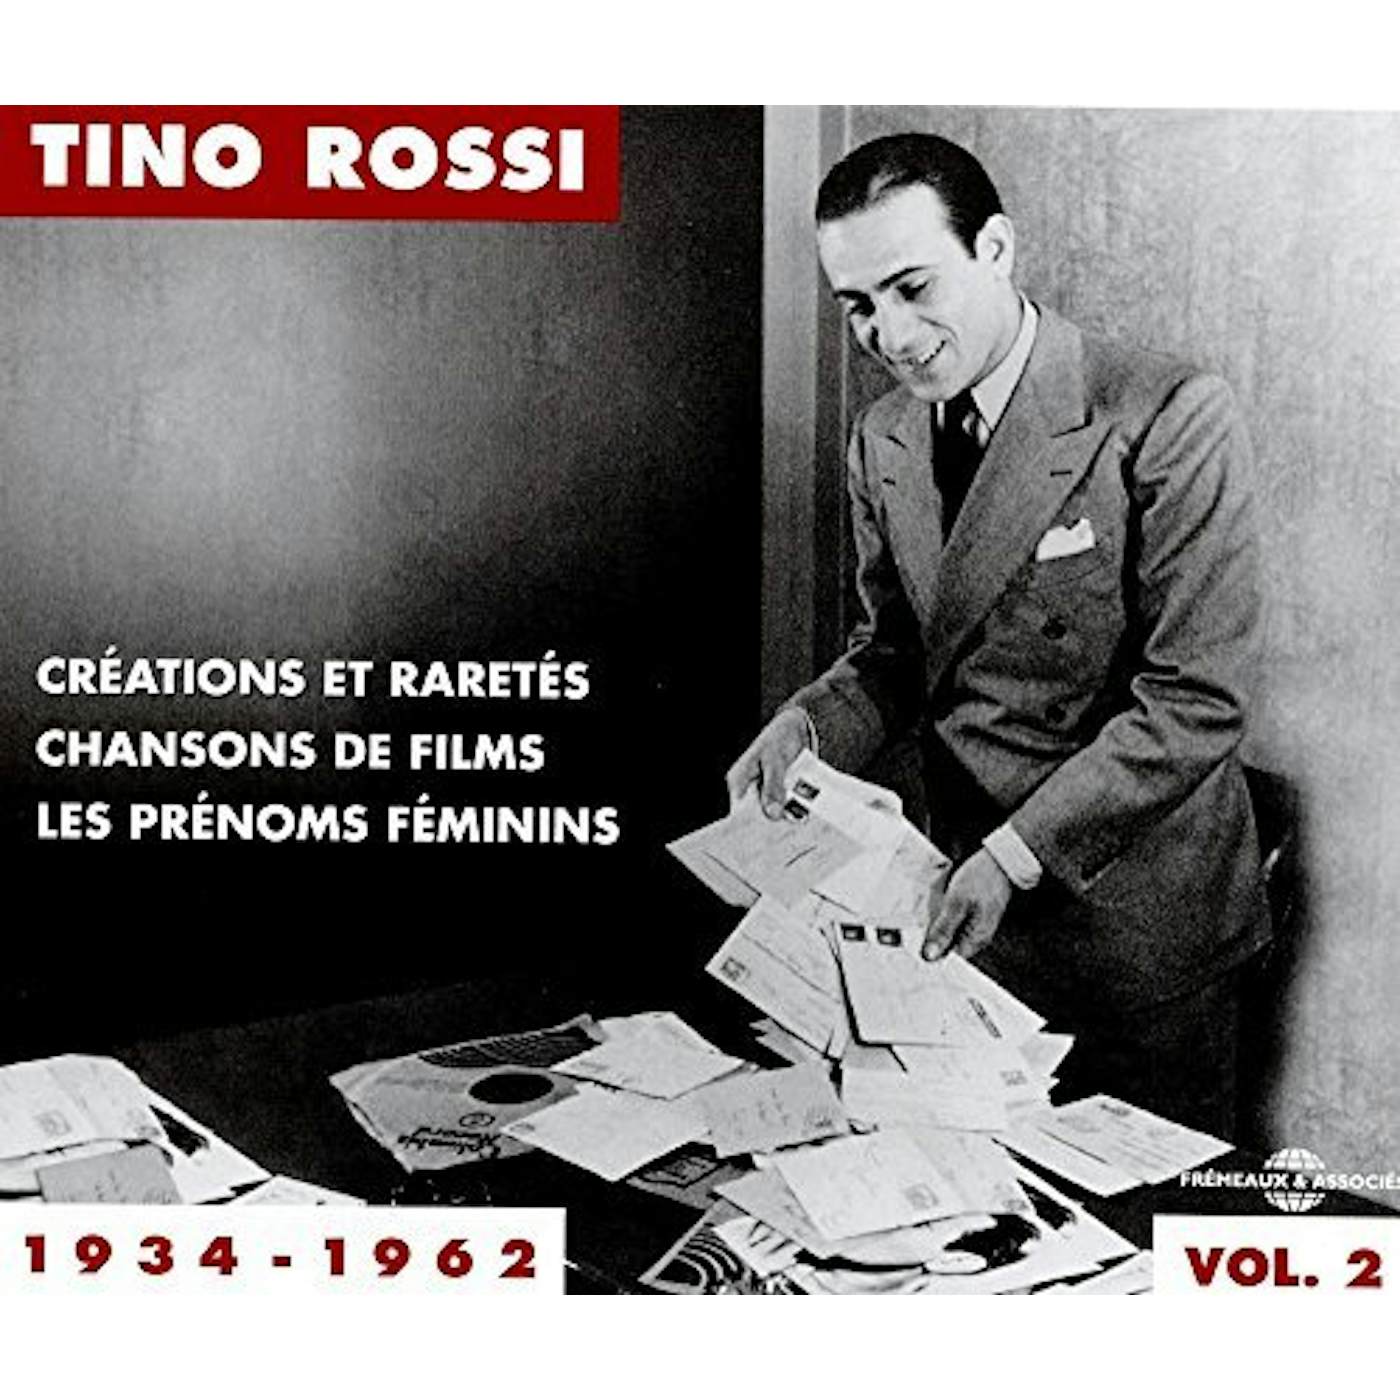 Tino Rossi ANTHOLOGY 1934-1962 VOL 2 CD